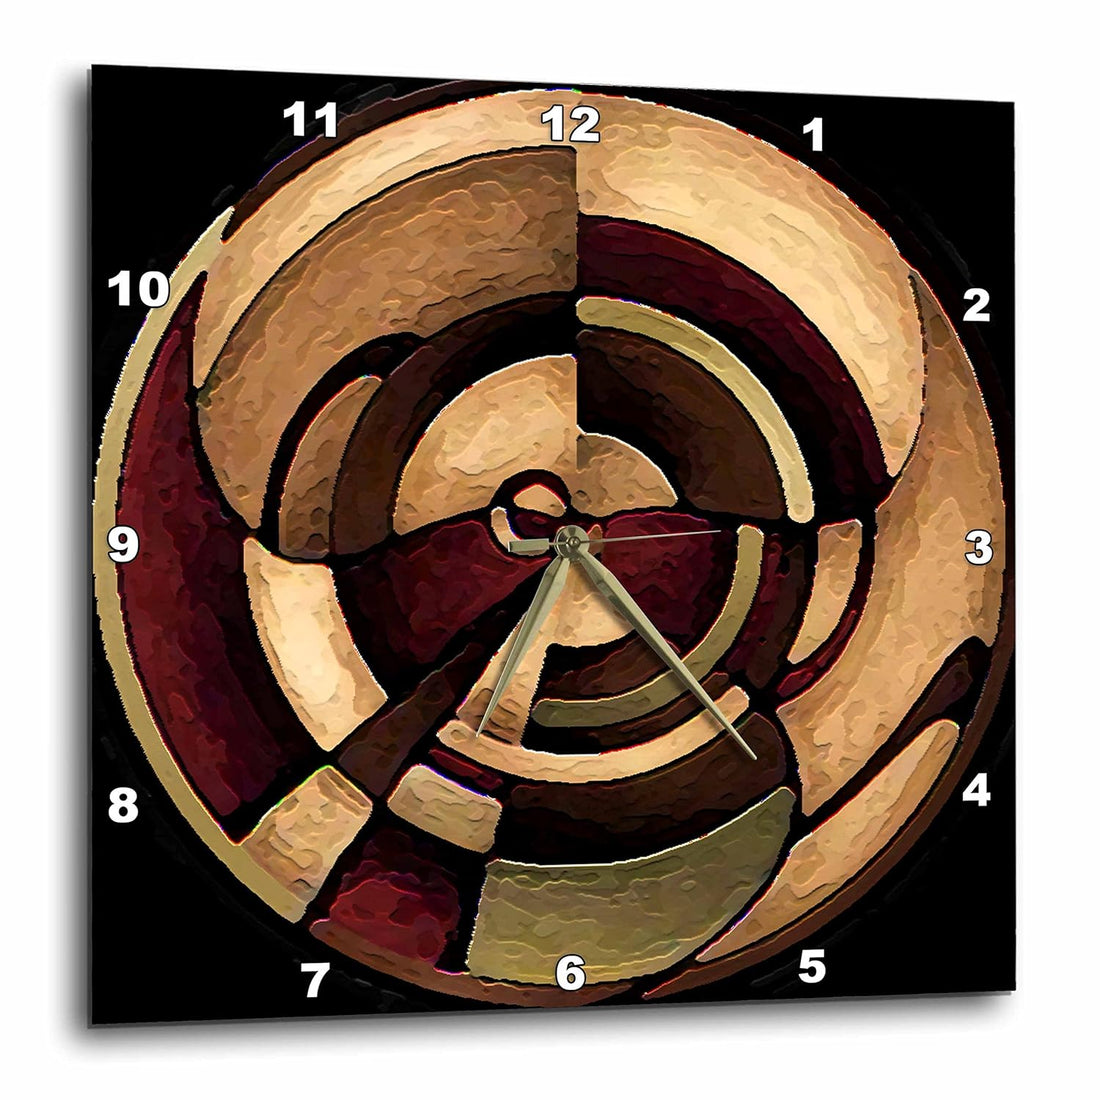 3dRose dpp_4050_1 LLC Digital Artwork Design Wall Clock, 10 by 10-Inch